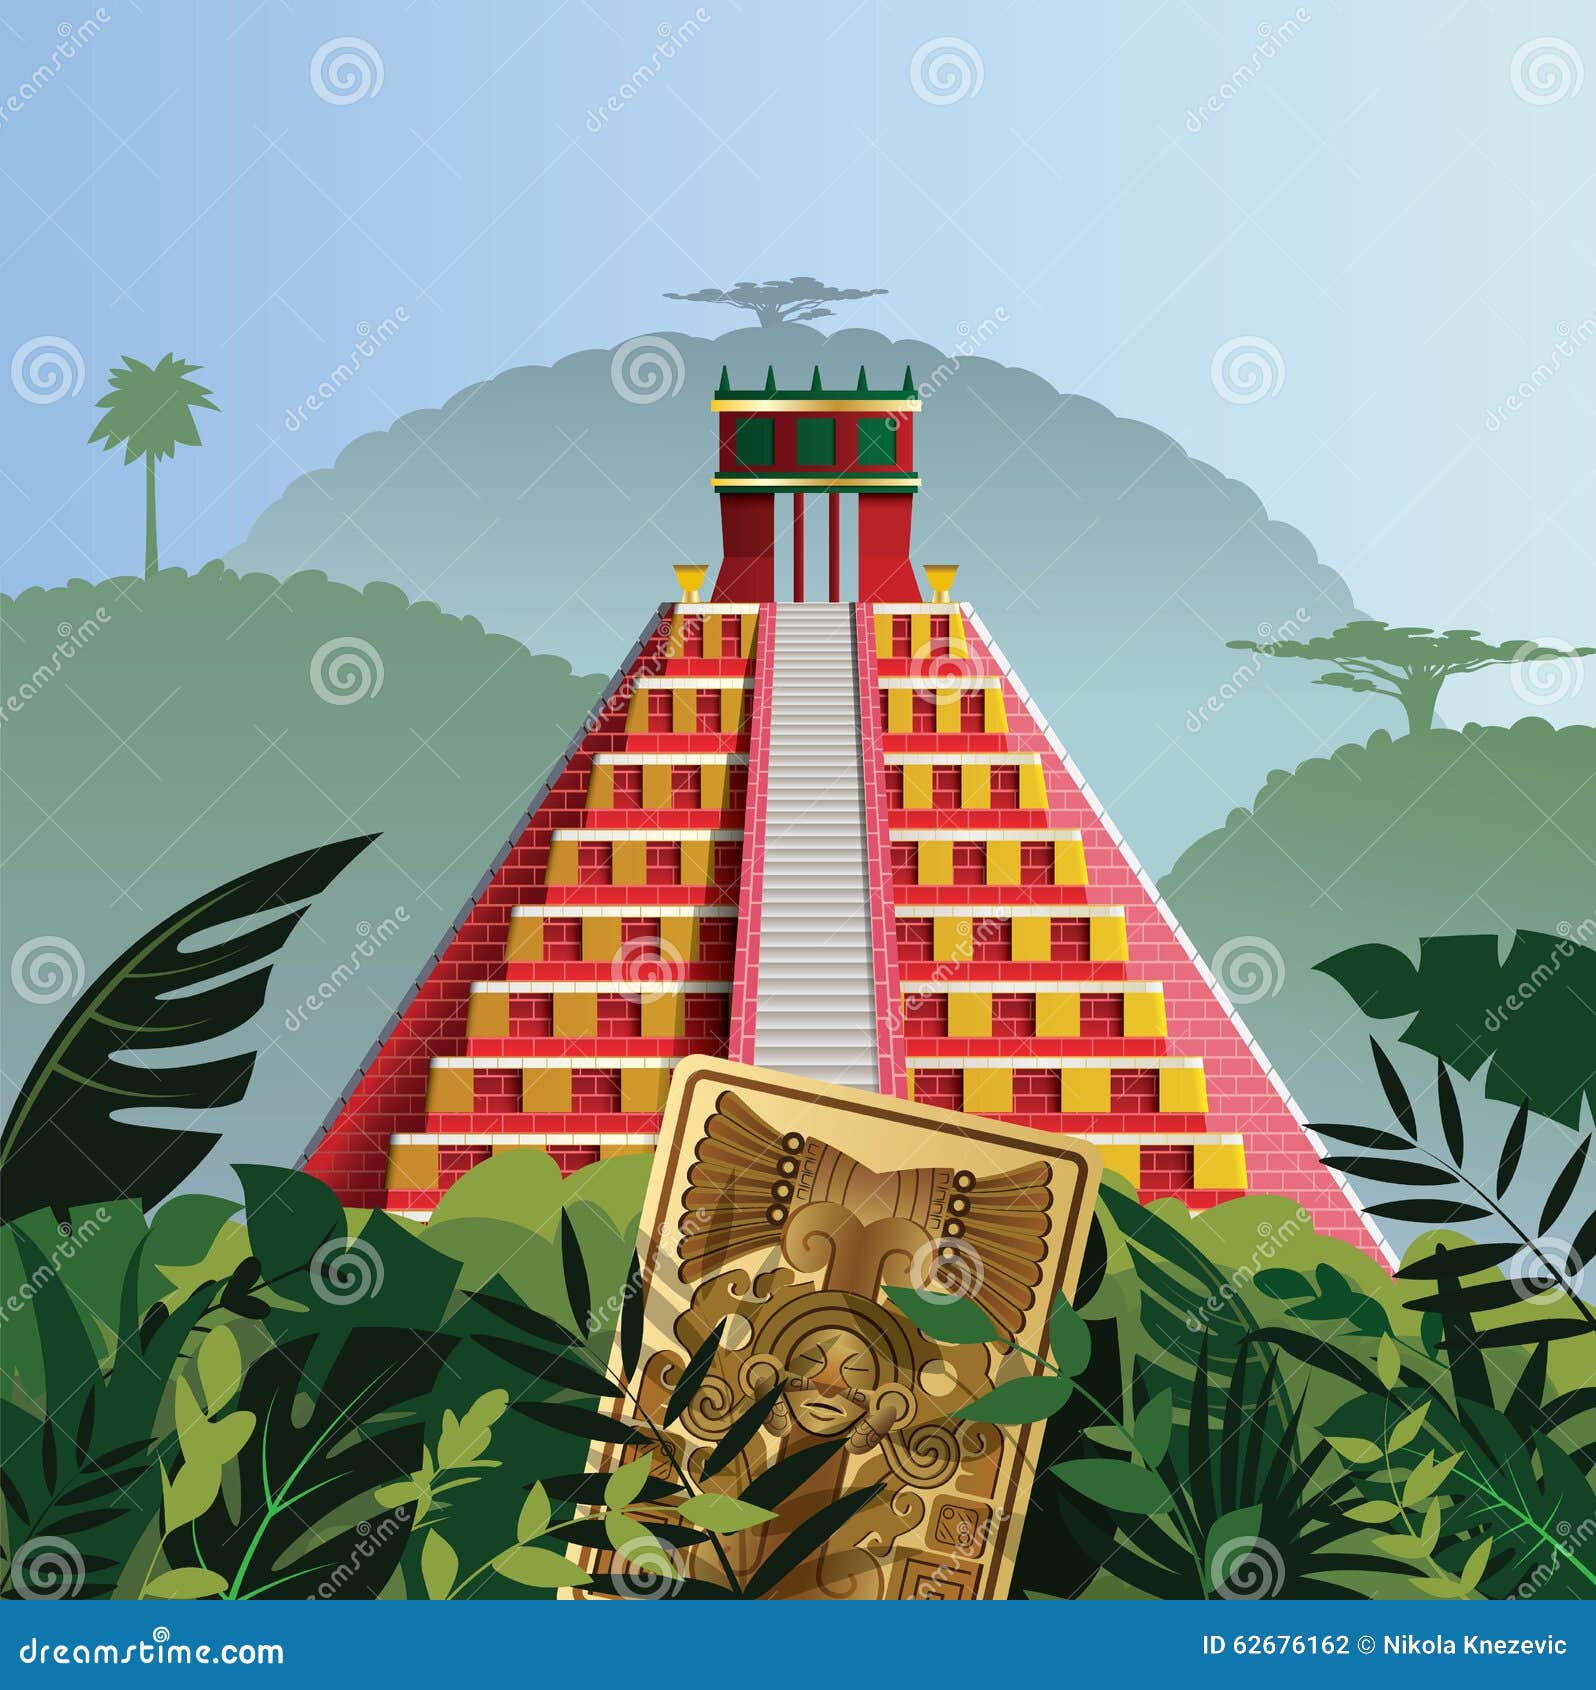 Acient Mayan pyramid stock illustration. Illustration of famous - 62676162